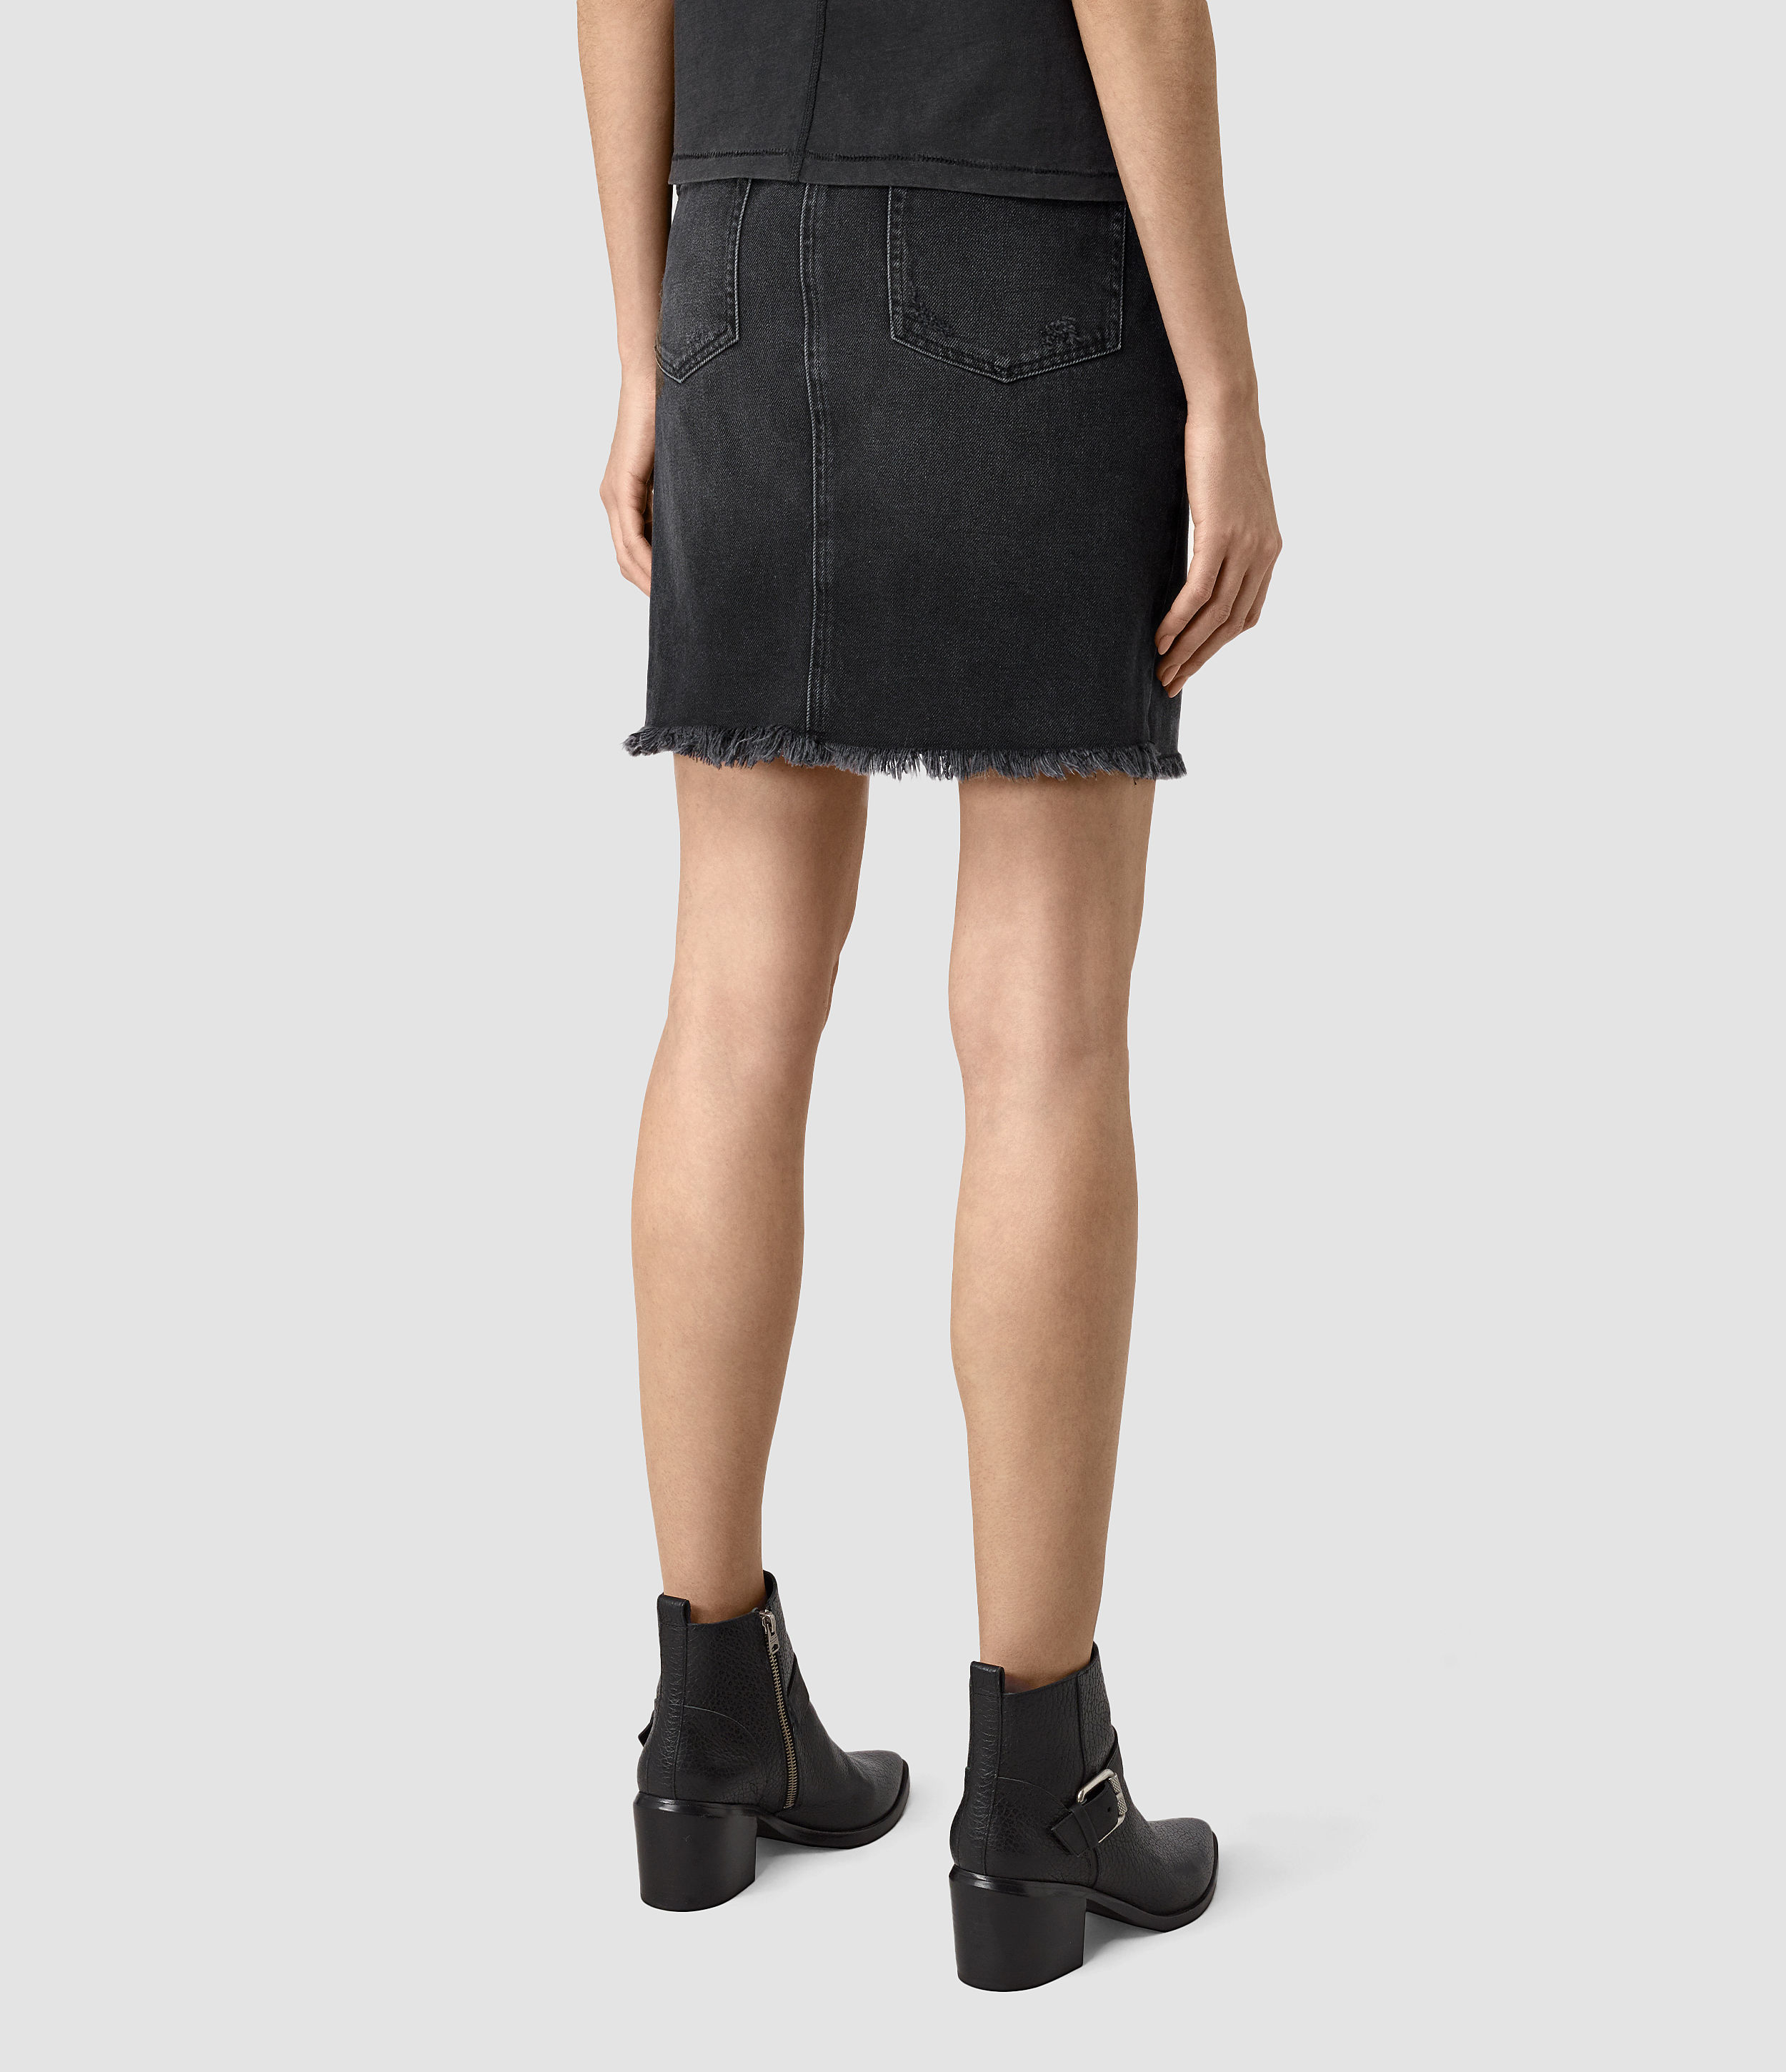 AllSaints Distressed Denim Skirt in Black - Lyst